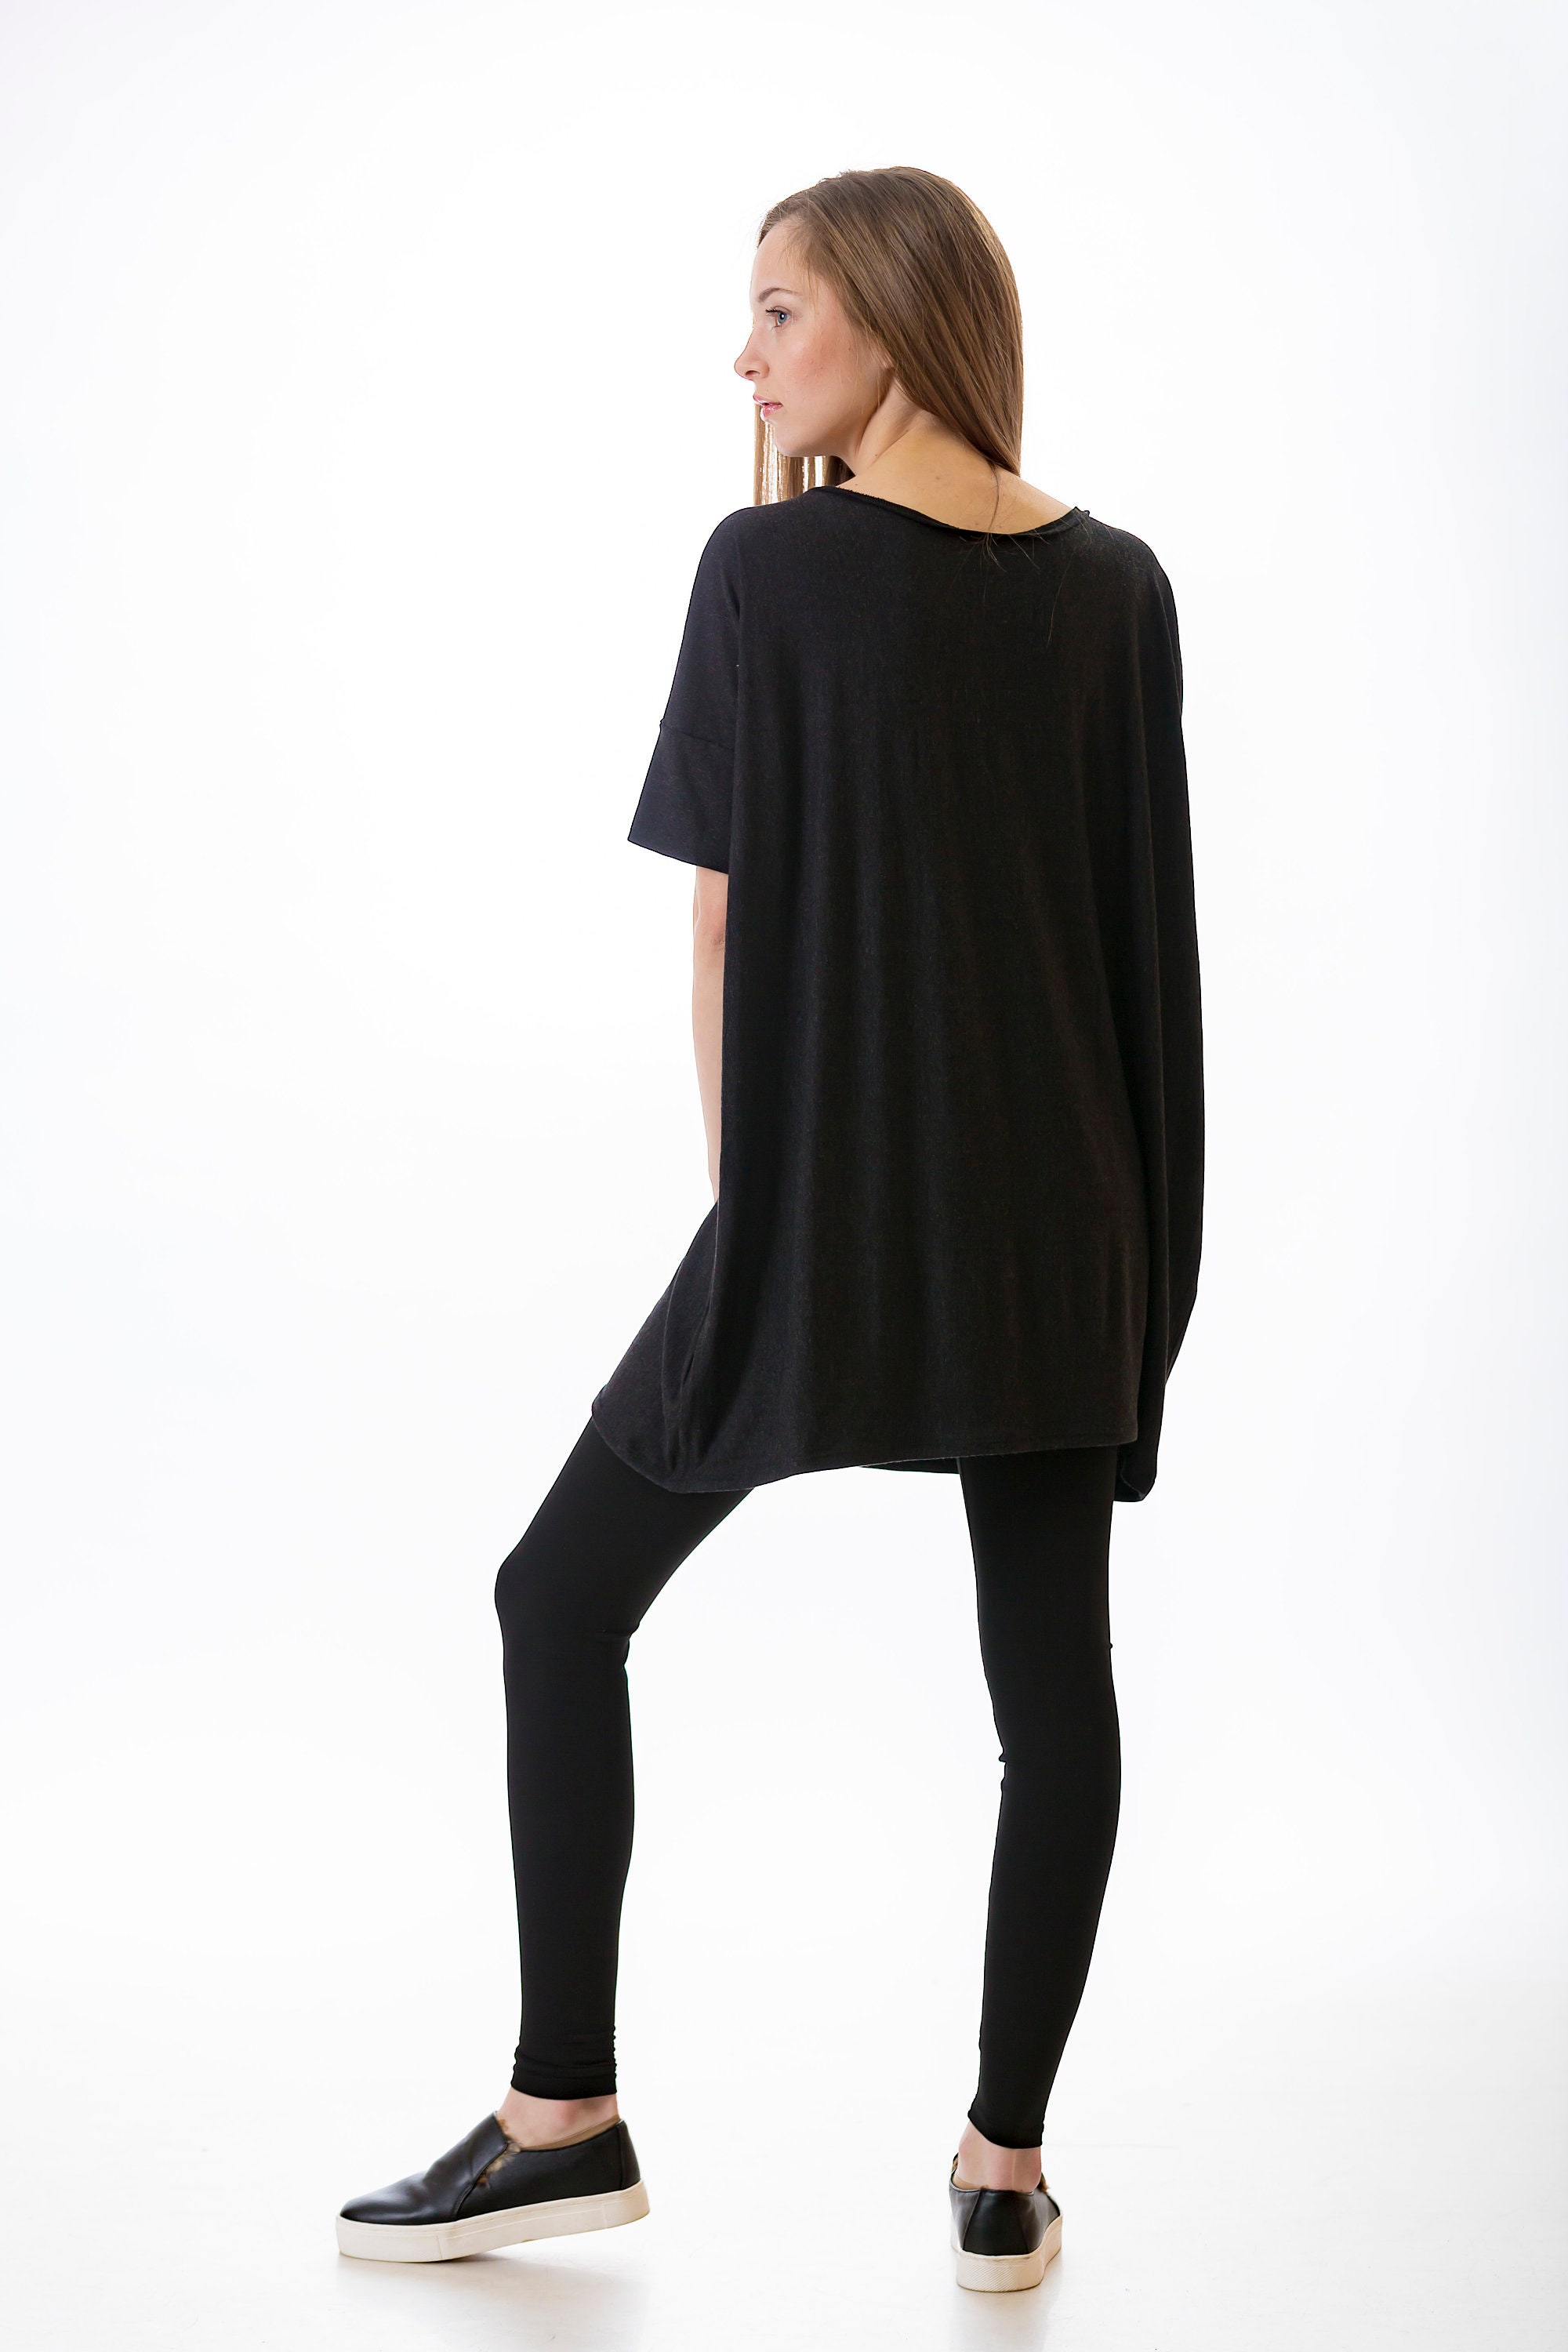 Black loose dress / loose tshirt/Black maxi dress / Plus size | Etsy